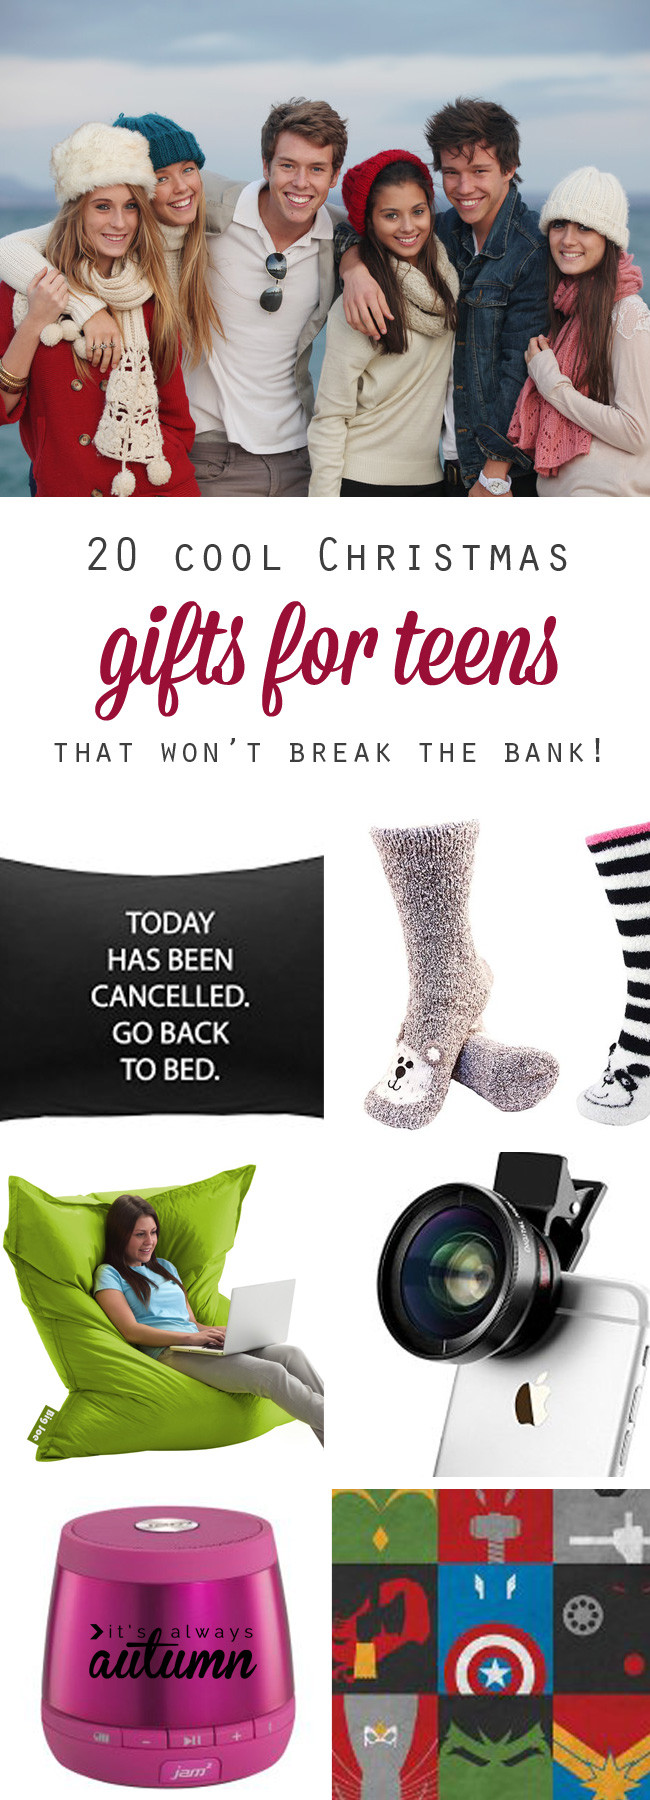 Best ideas about Teens Christmas Gift Ideas
. Save or Pin best Christmas t ideas for teens It s Always Autumn Now.